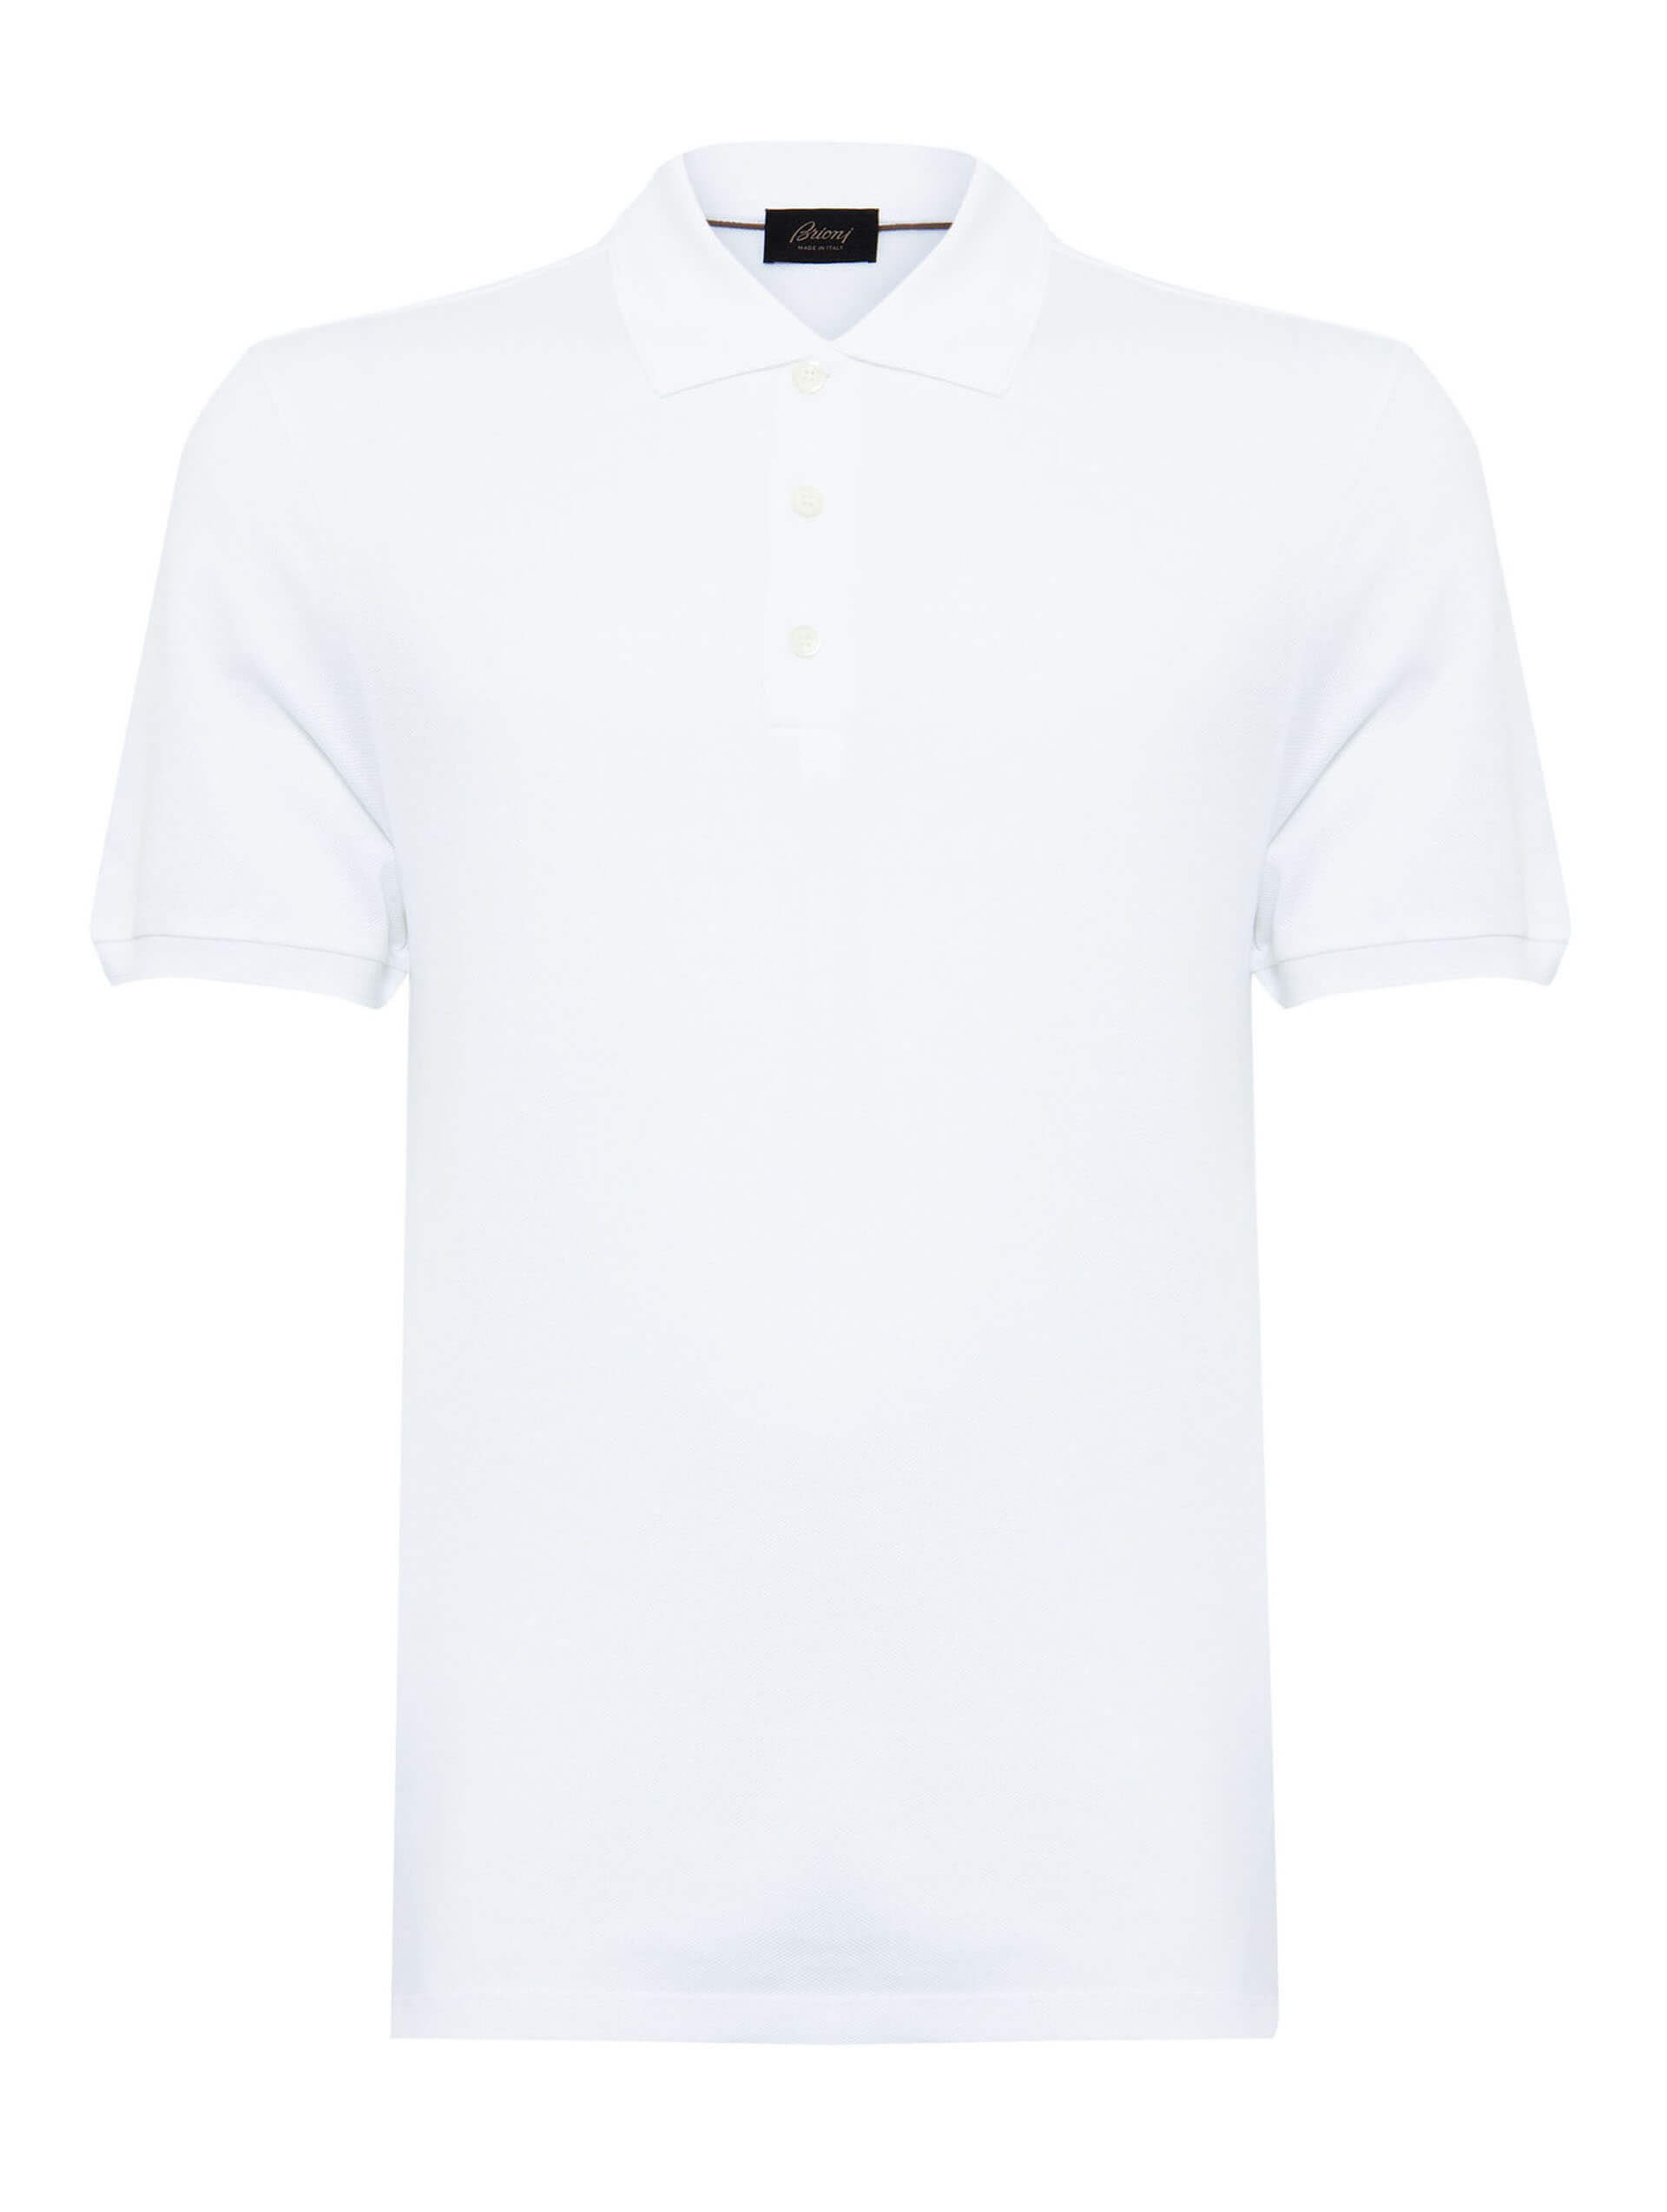 Camiseta Manga Curta Polo Branca